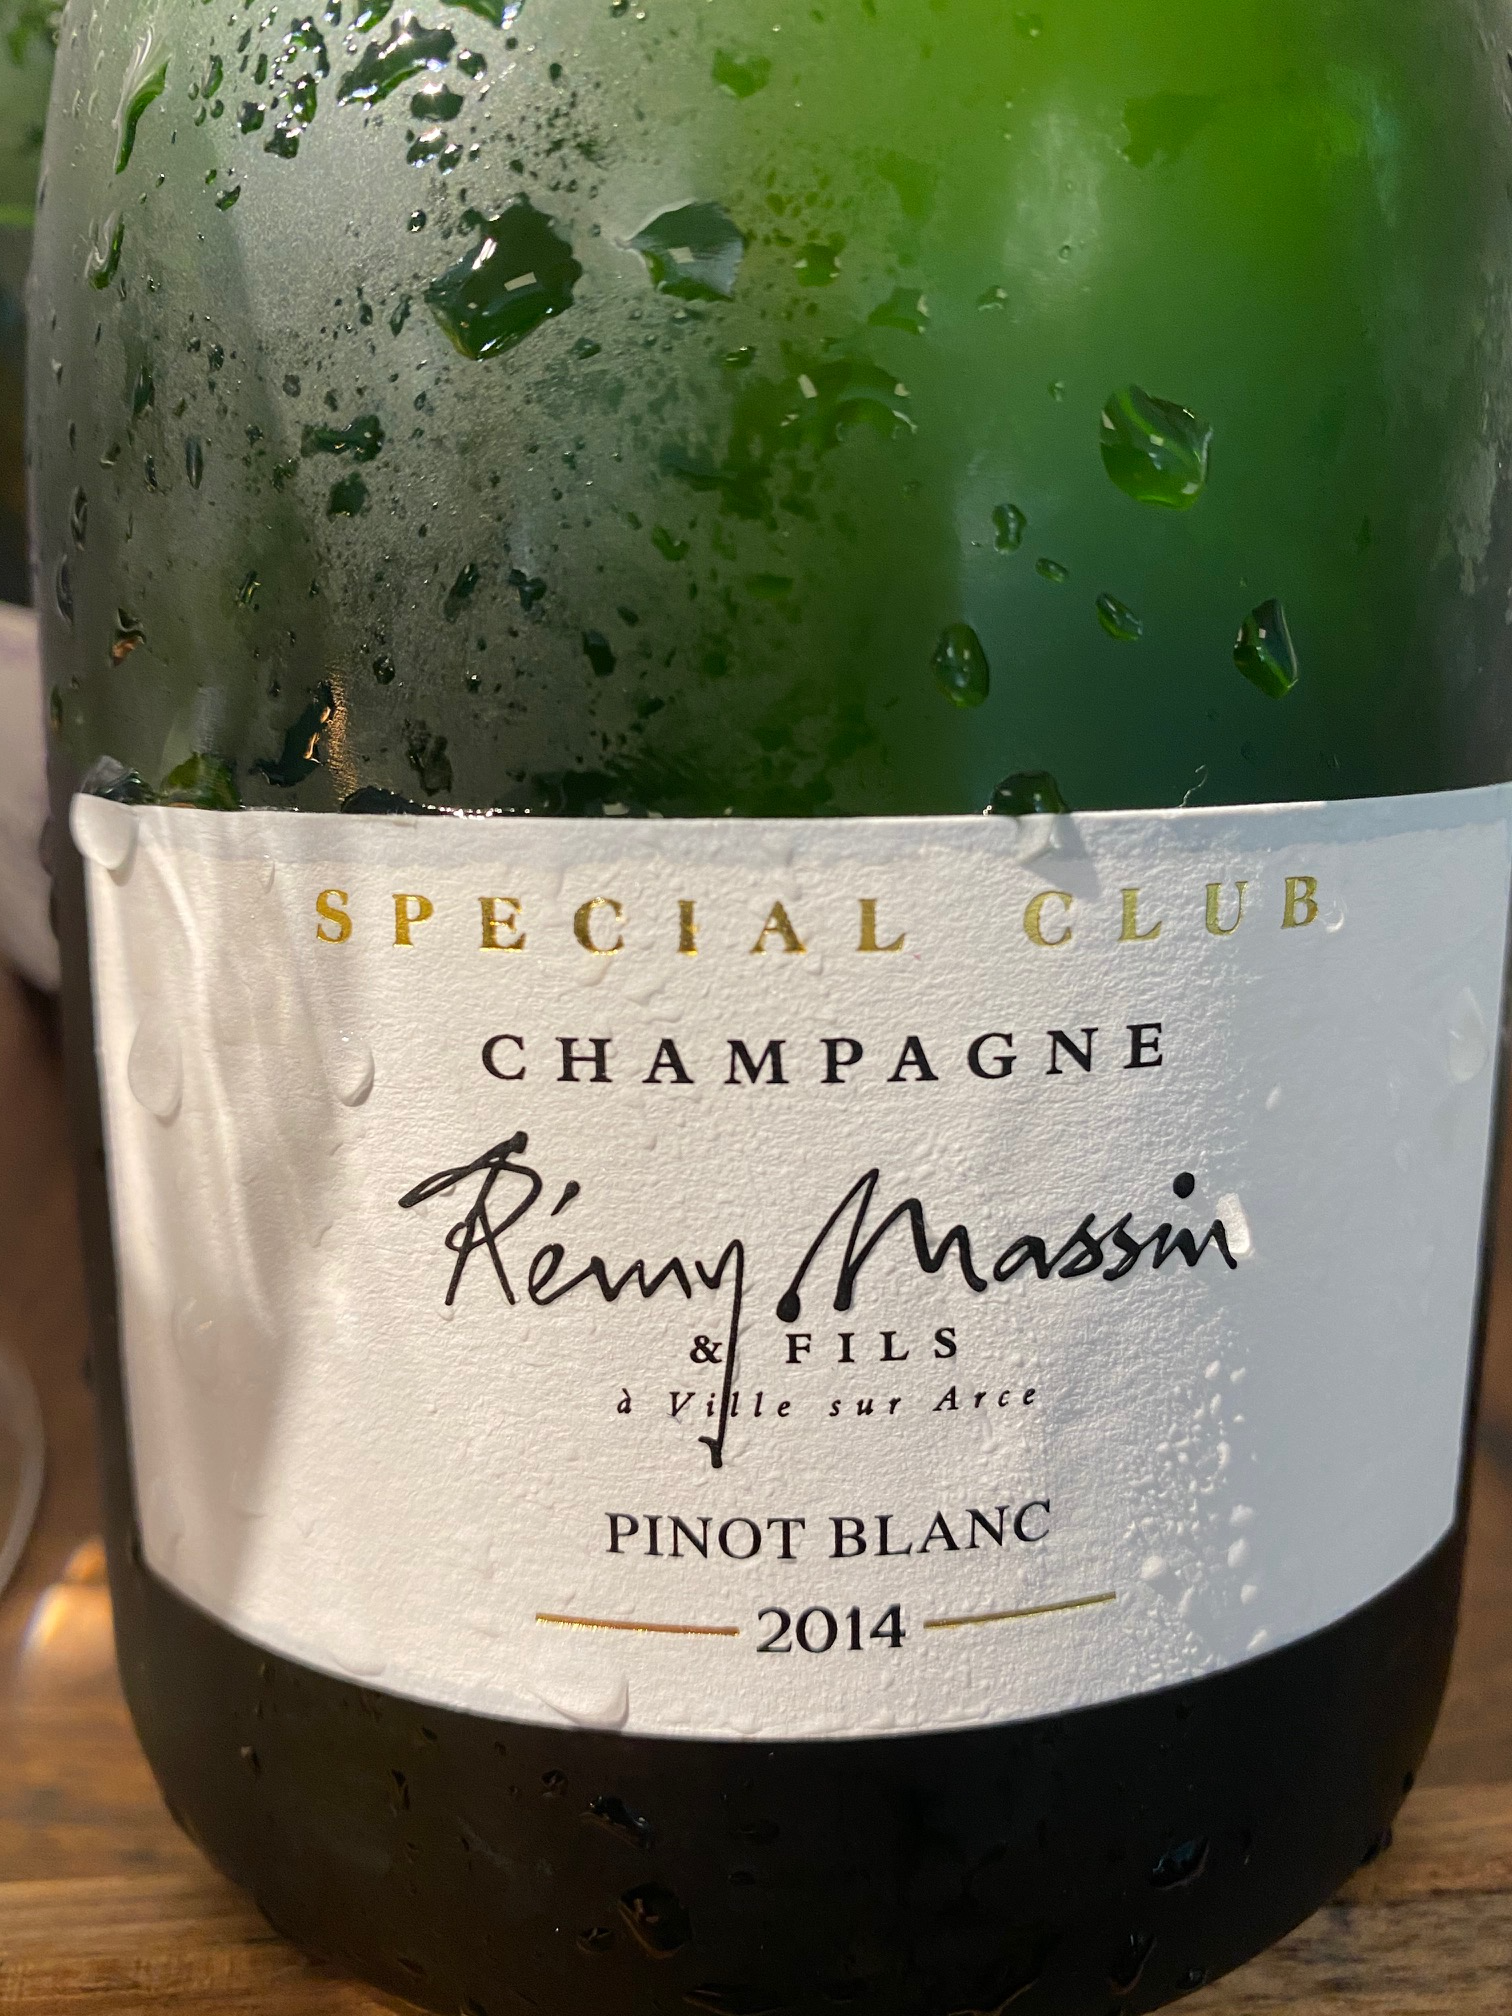 Rémy Massin & Fils Pinot blanc 2014